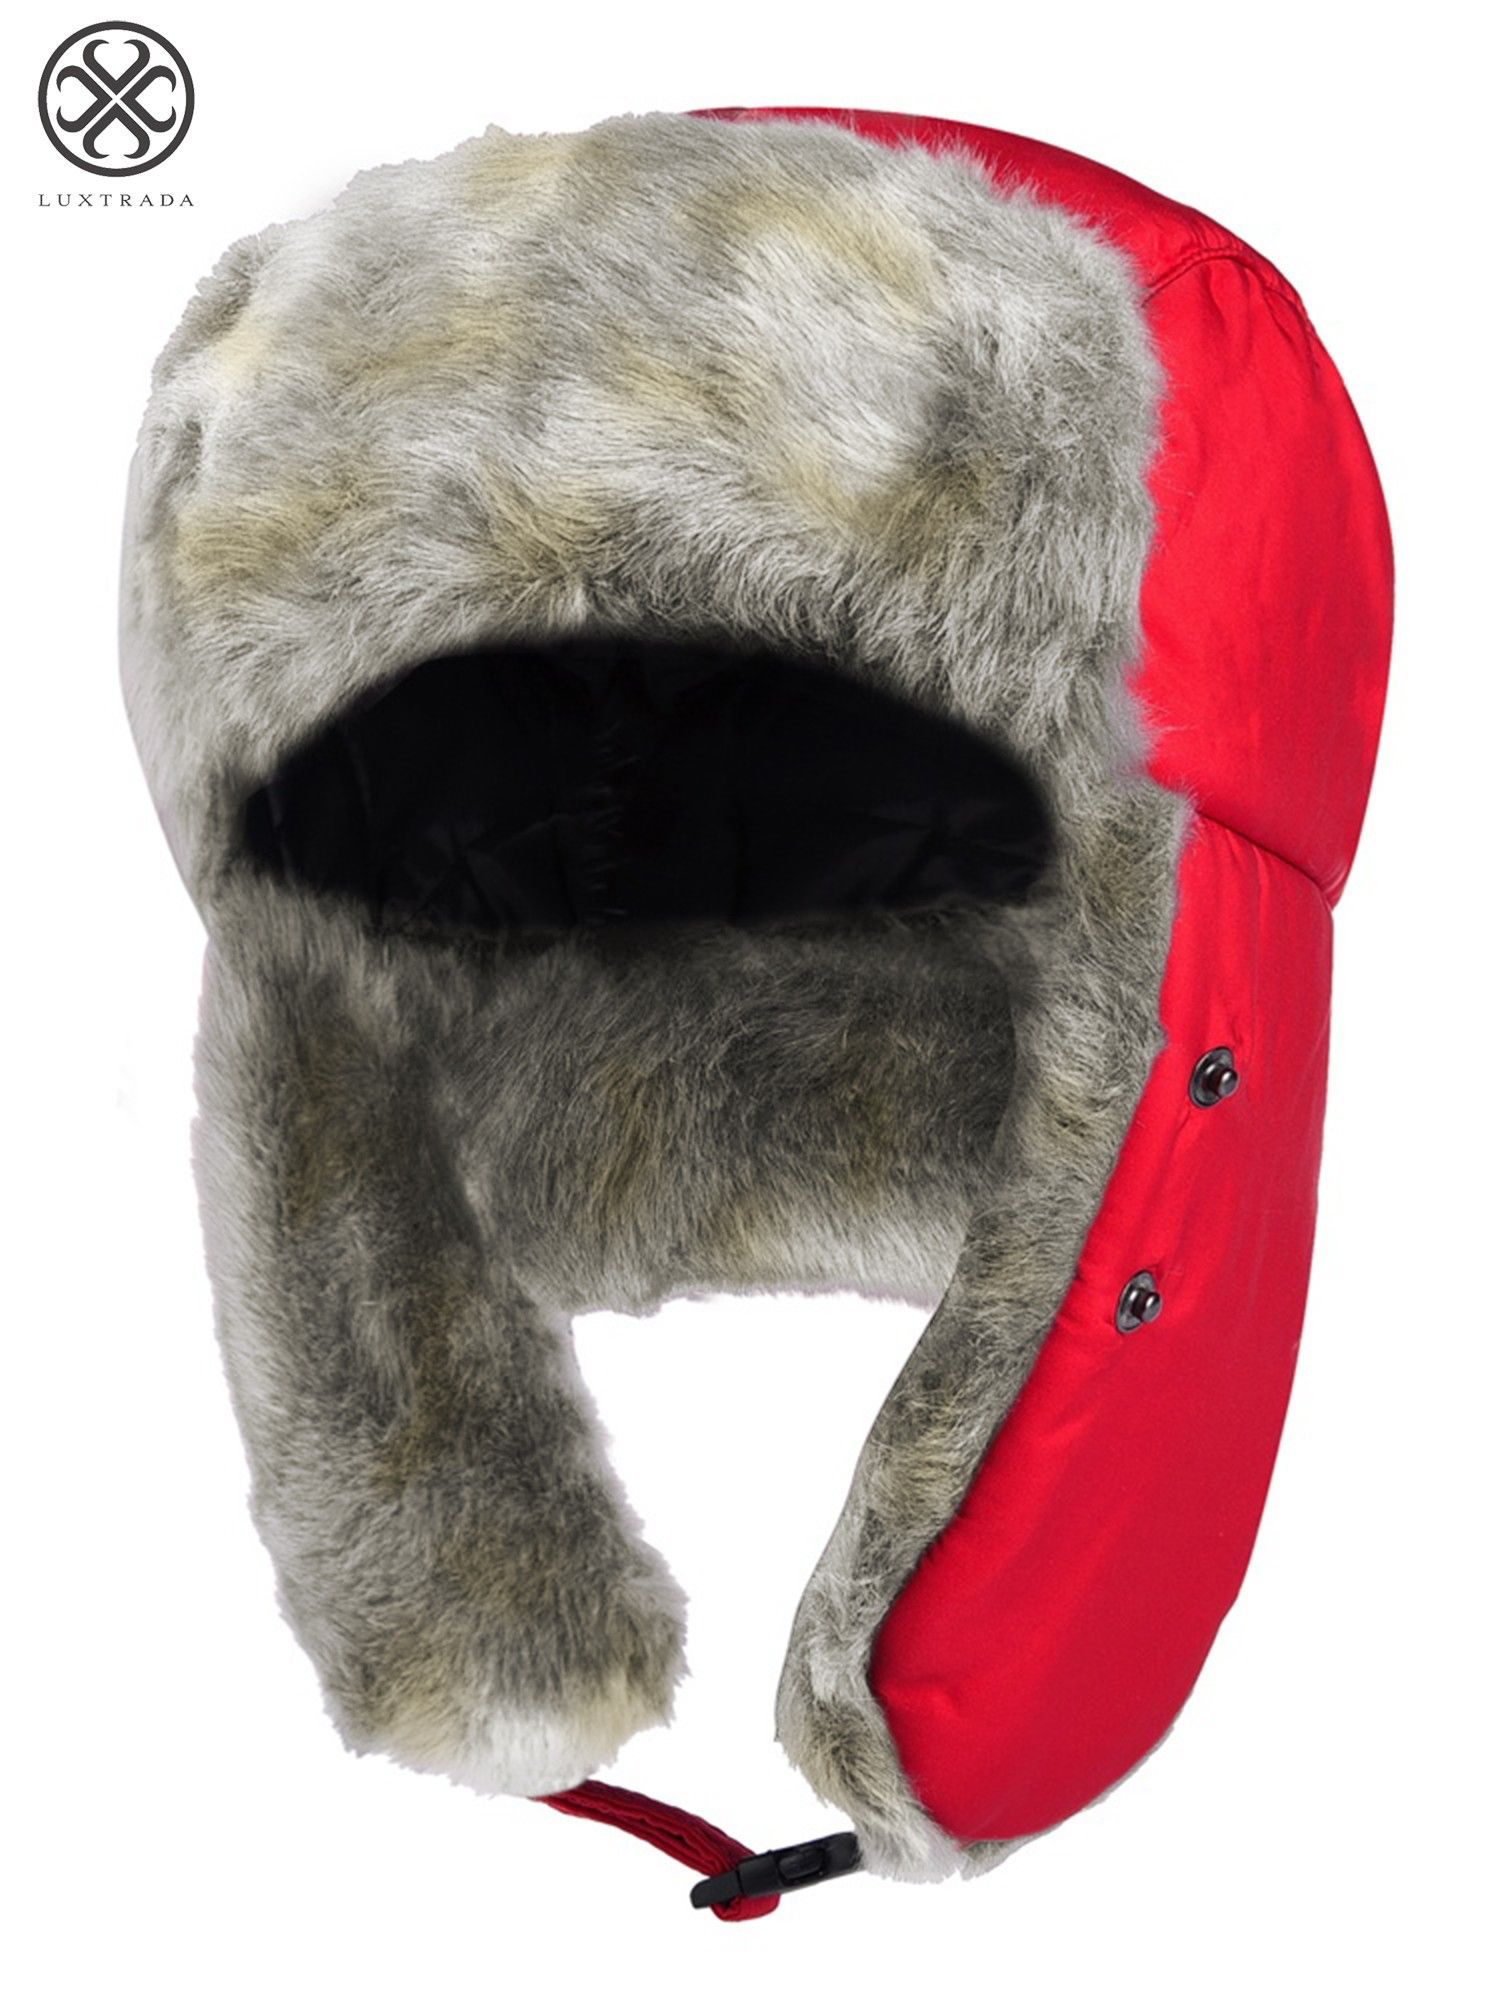 Luxtrada Winter Hats for Men and Women Trooper Hunting Hat Ushanka Hat Ski Hat with Ear Flaps Windproof Waterproof Warm Hat (Black) - image 4 of 10